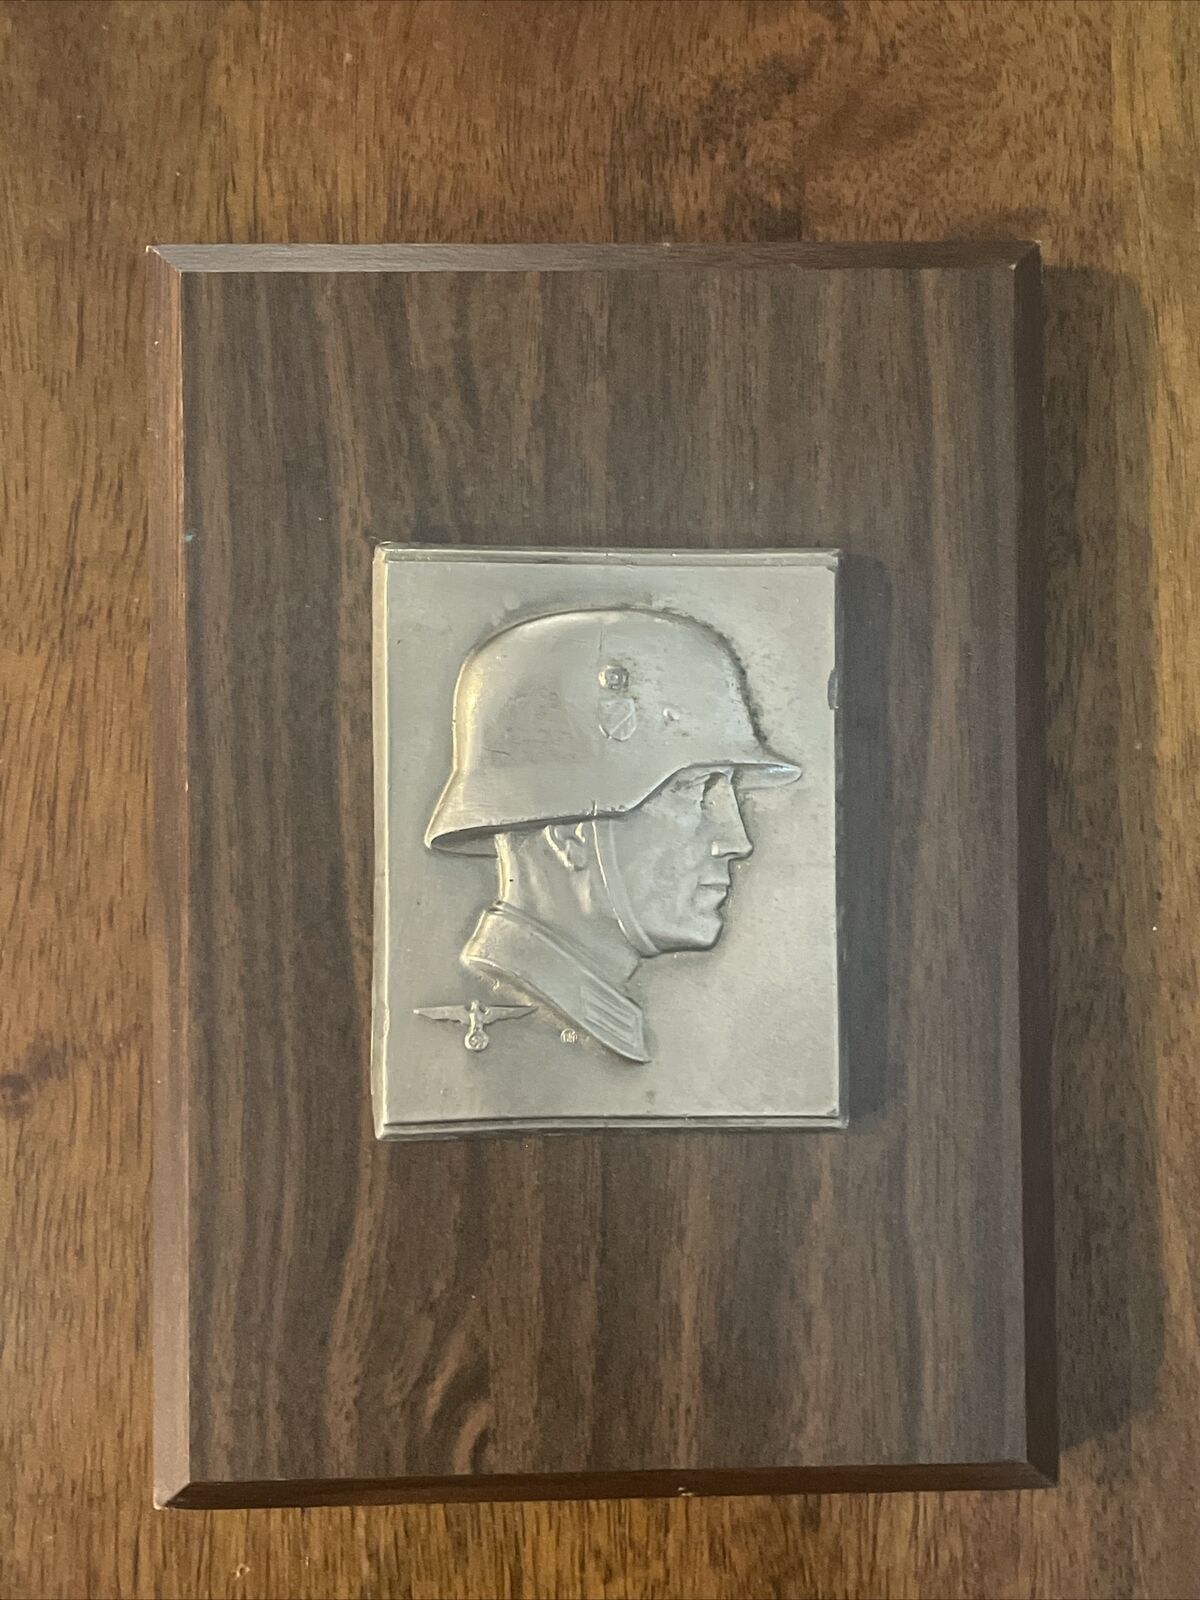 RARE Vintage WW2 WWII German Military War Soldier Helmet Wall Plaque